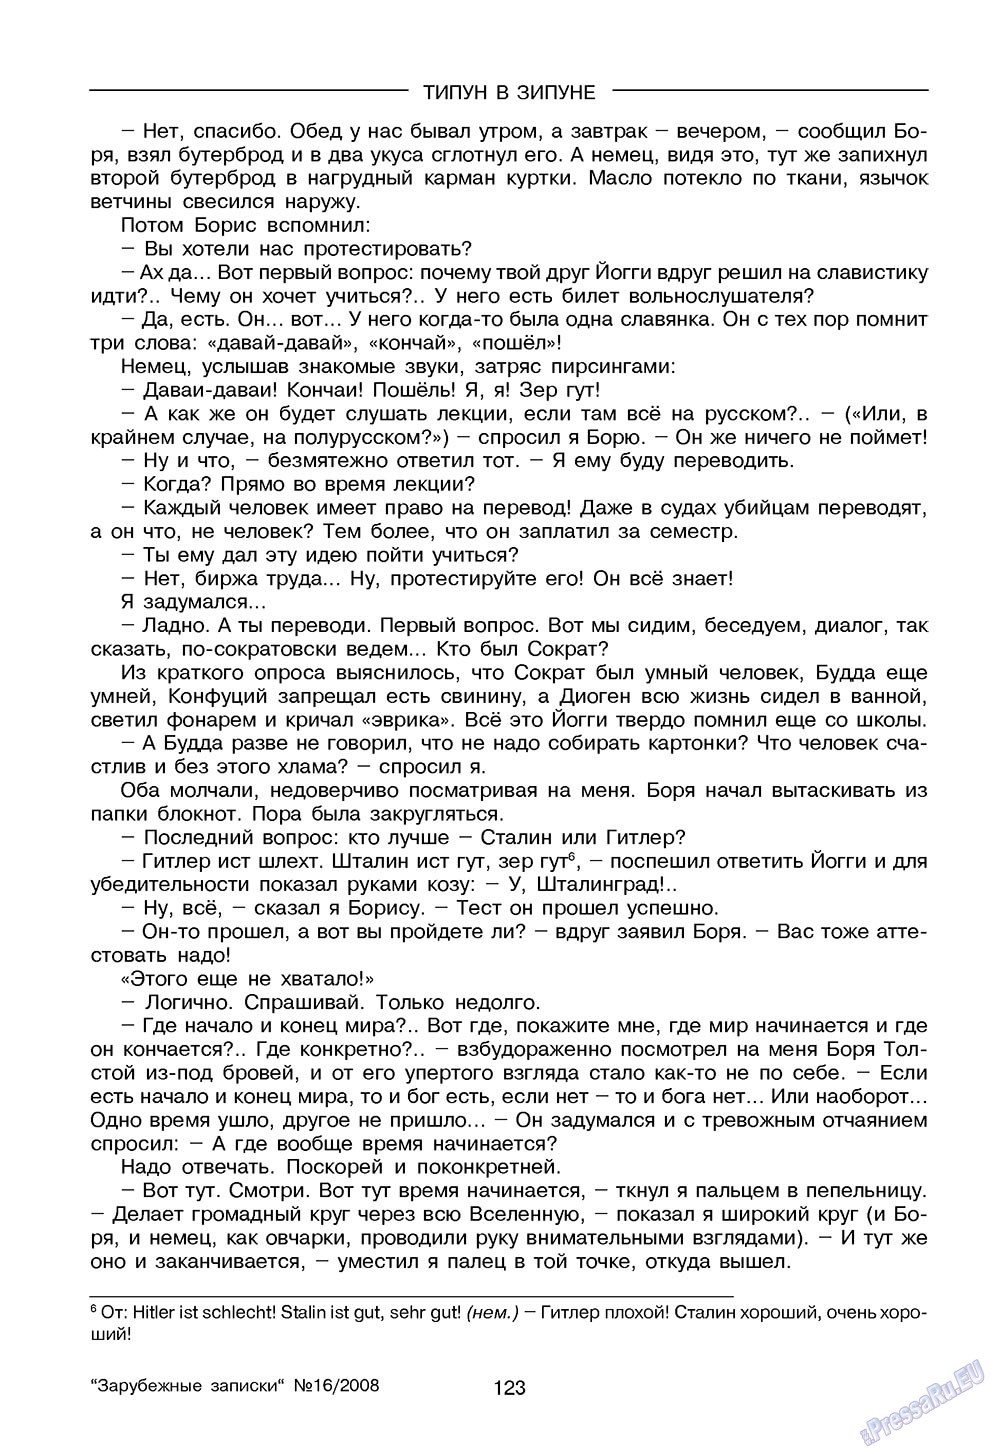 Зарубежные записки, журнал. 2008 №4 стр.125